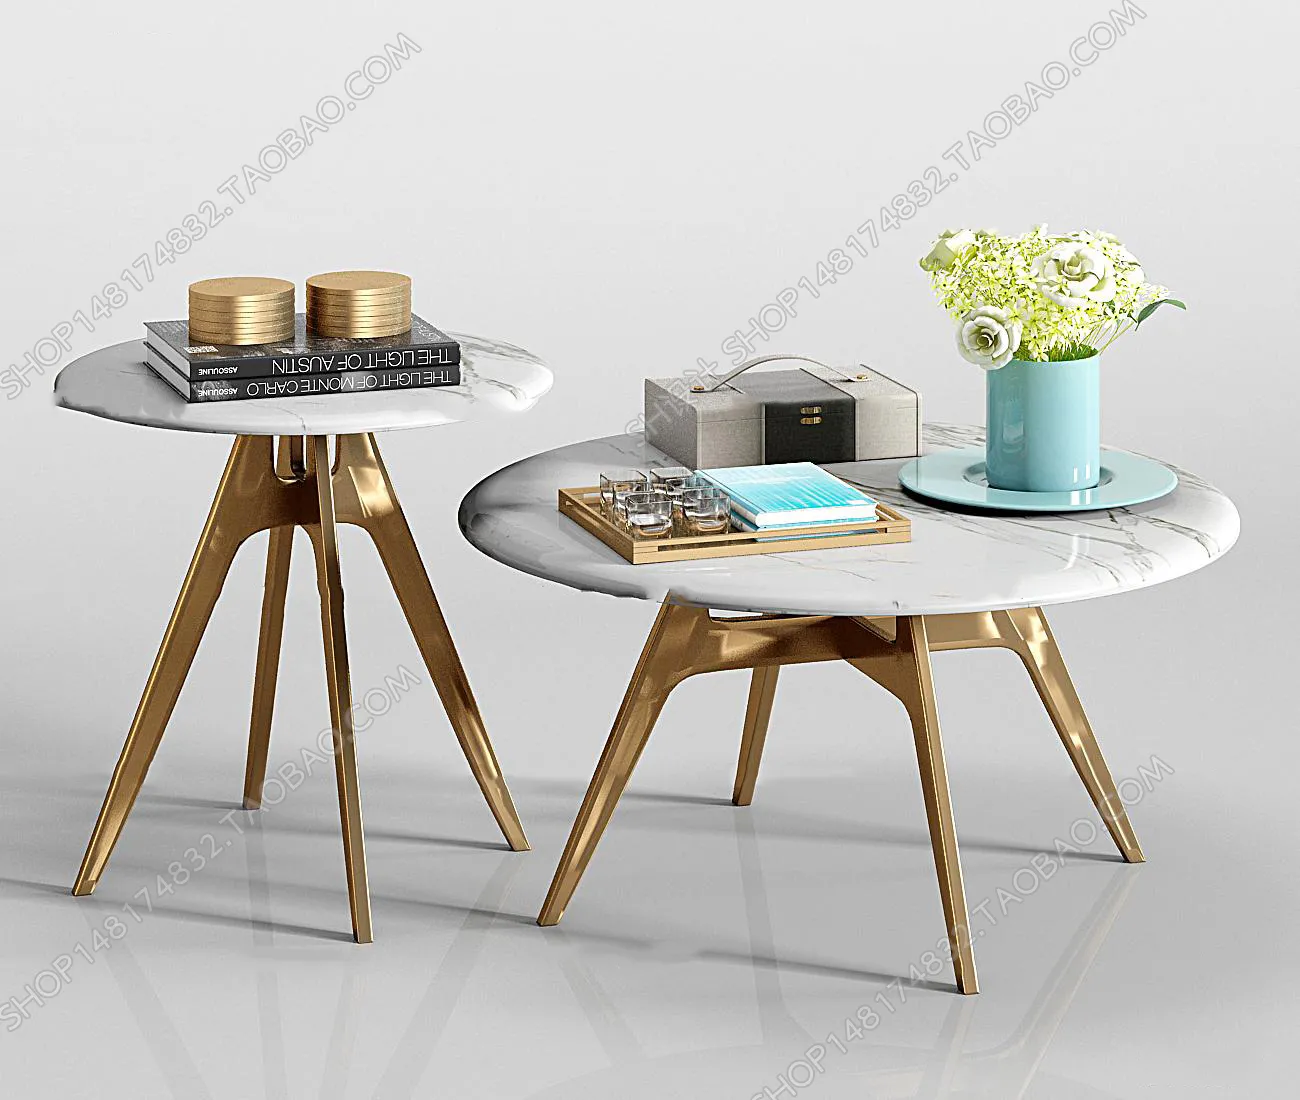 3DSKY MODELS – COFFEE TABLE 3D MODELS – 039